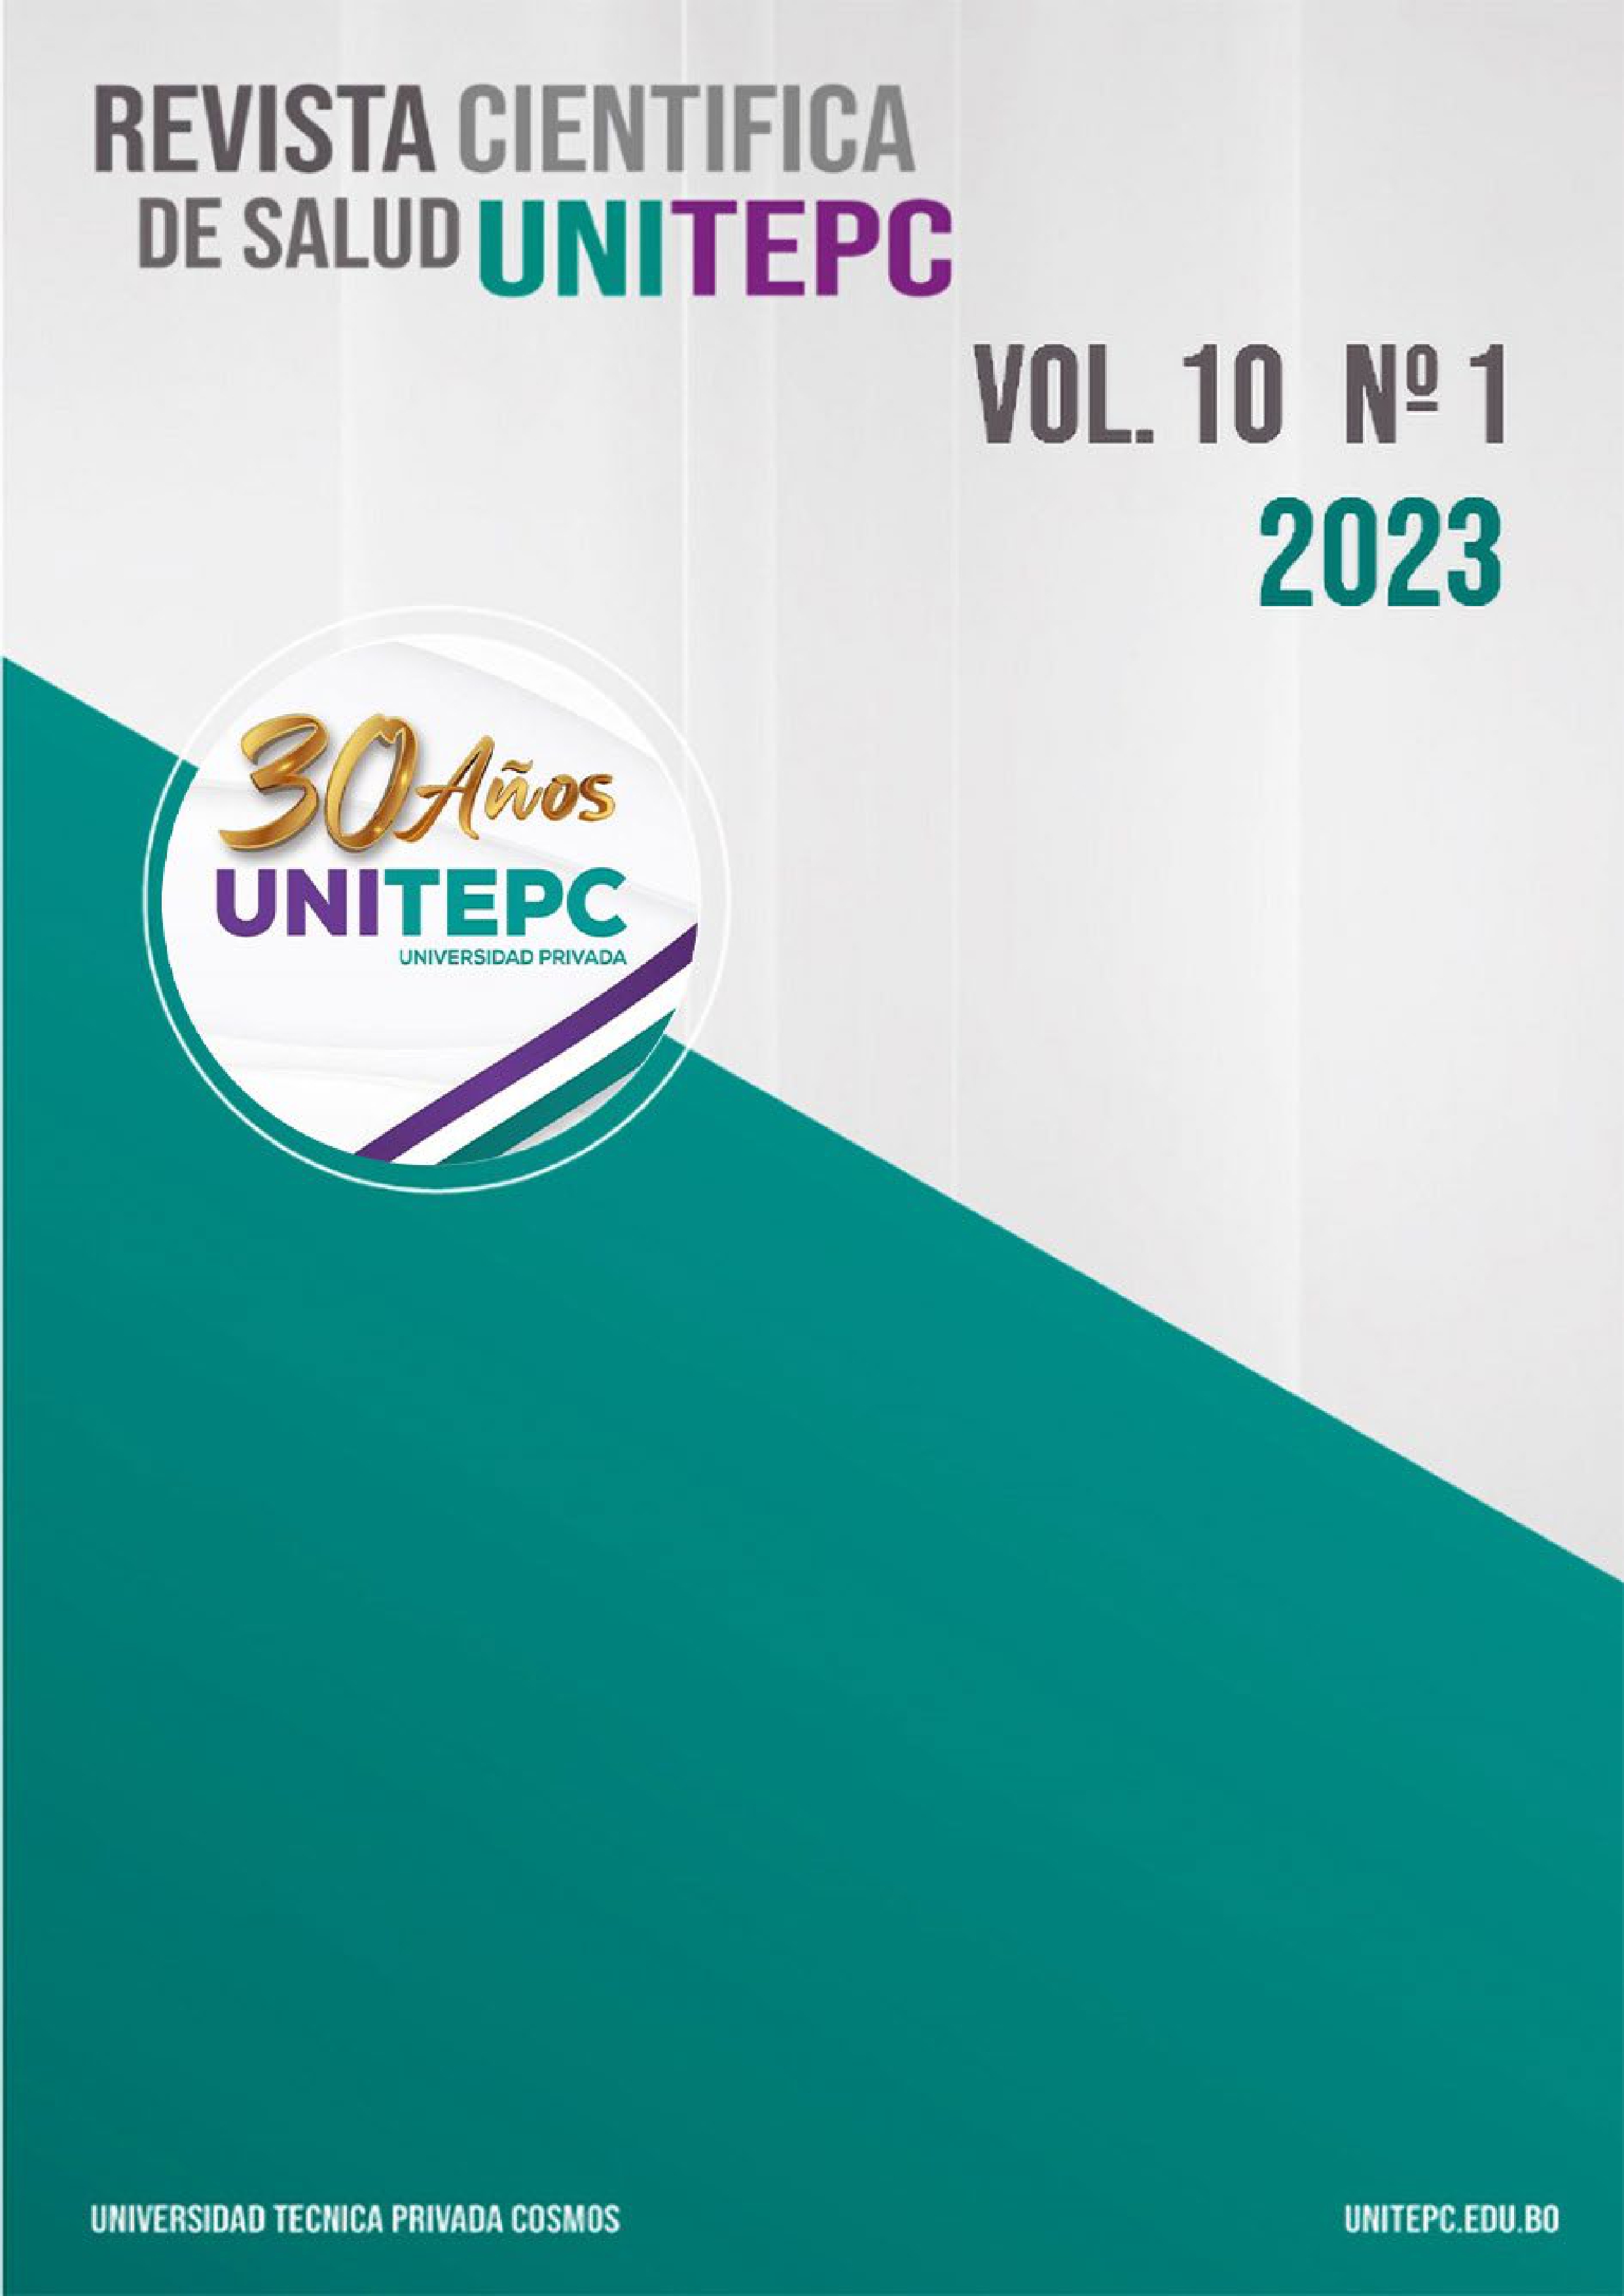 					Ver Vol. 10 Núm. 1 (2023): Revista Científica de Salud UNITEPC
				